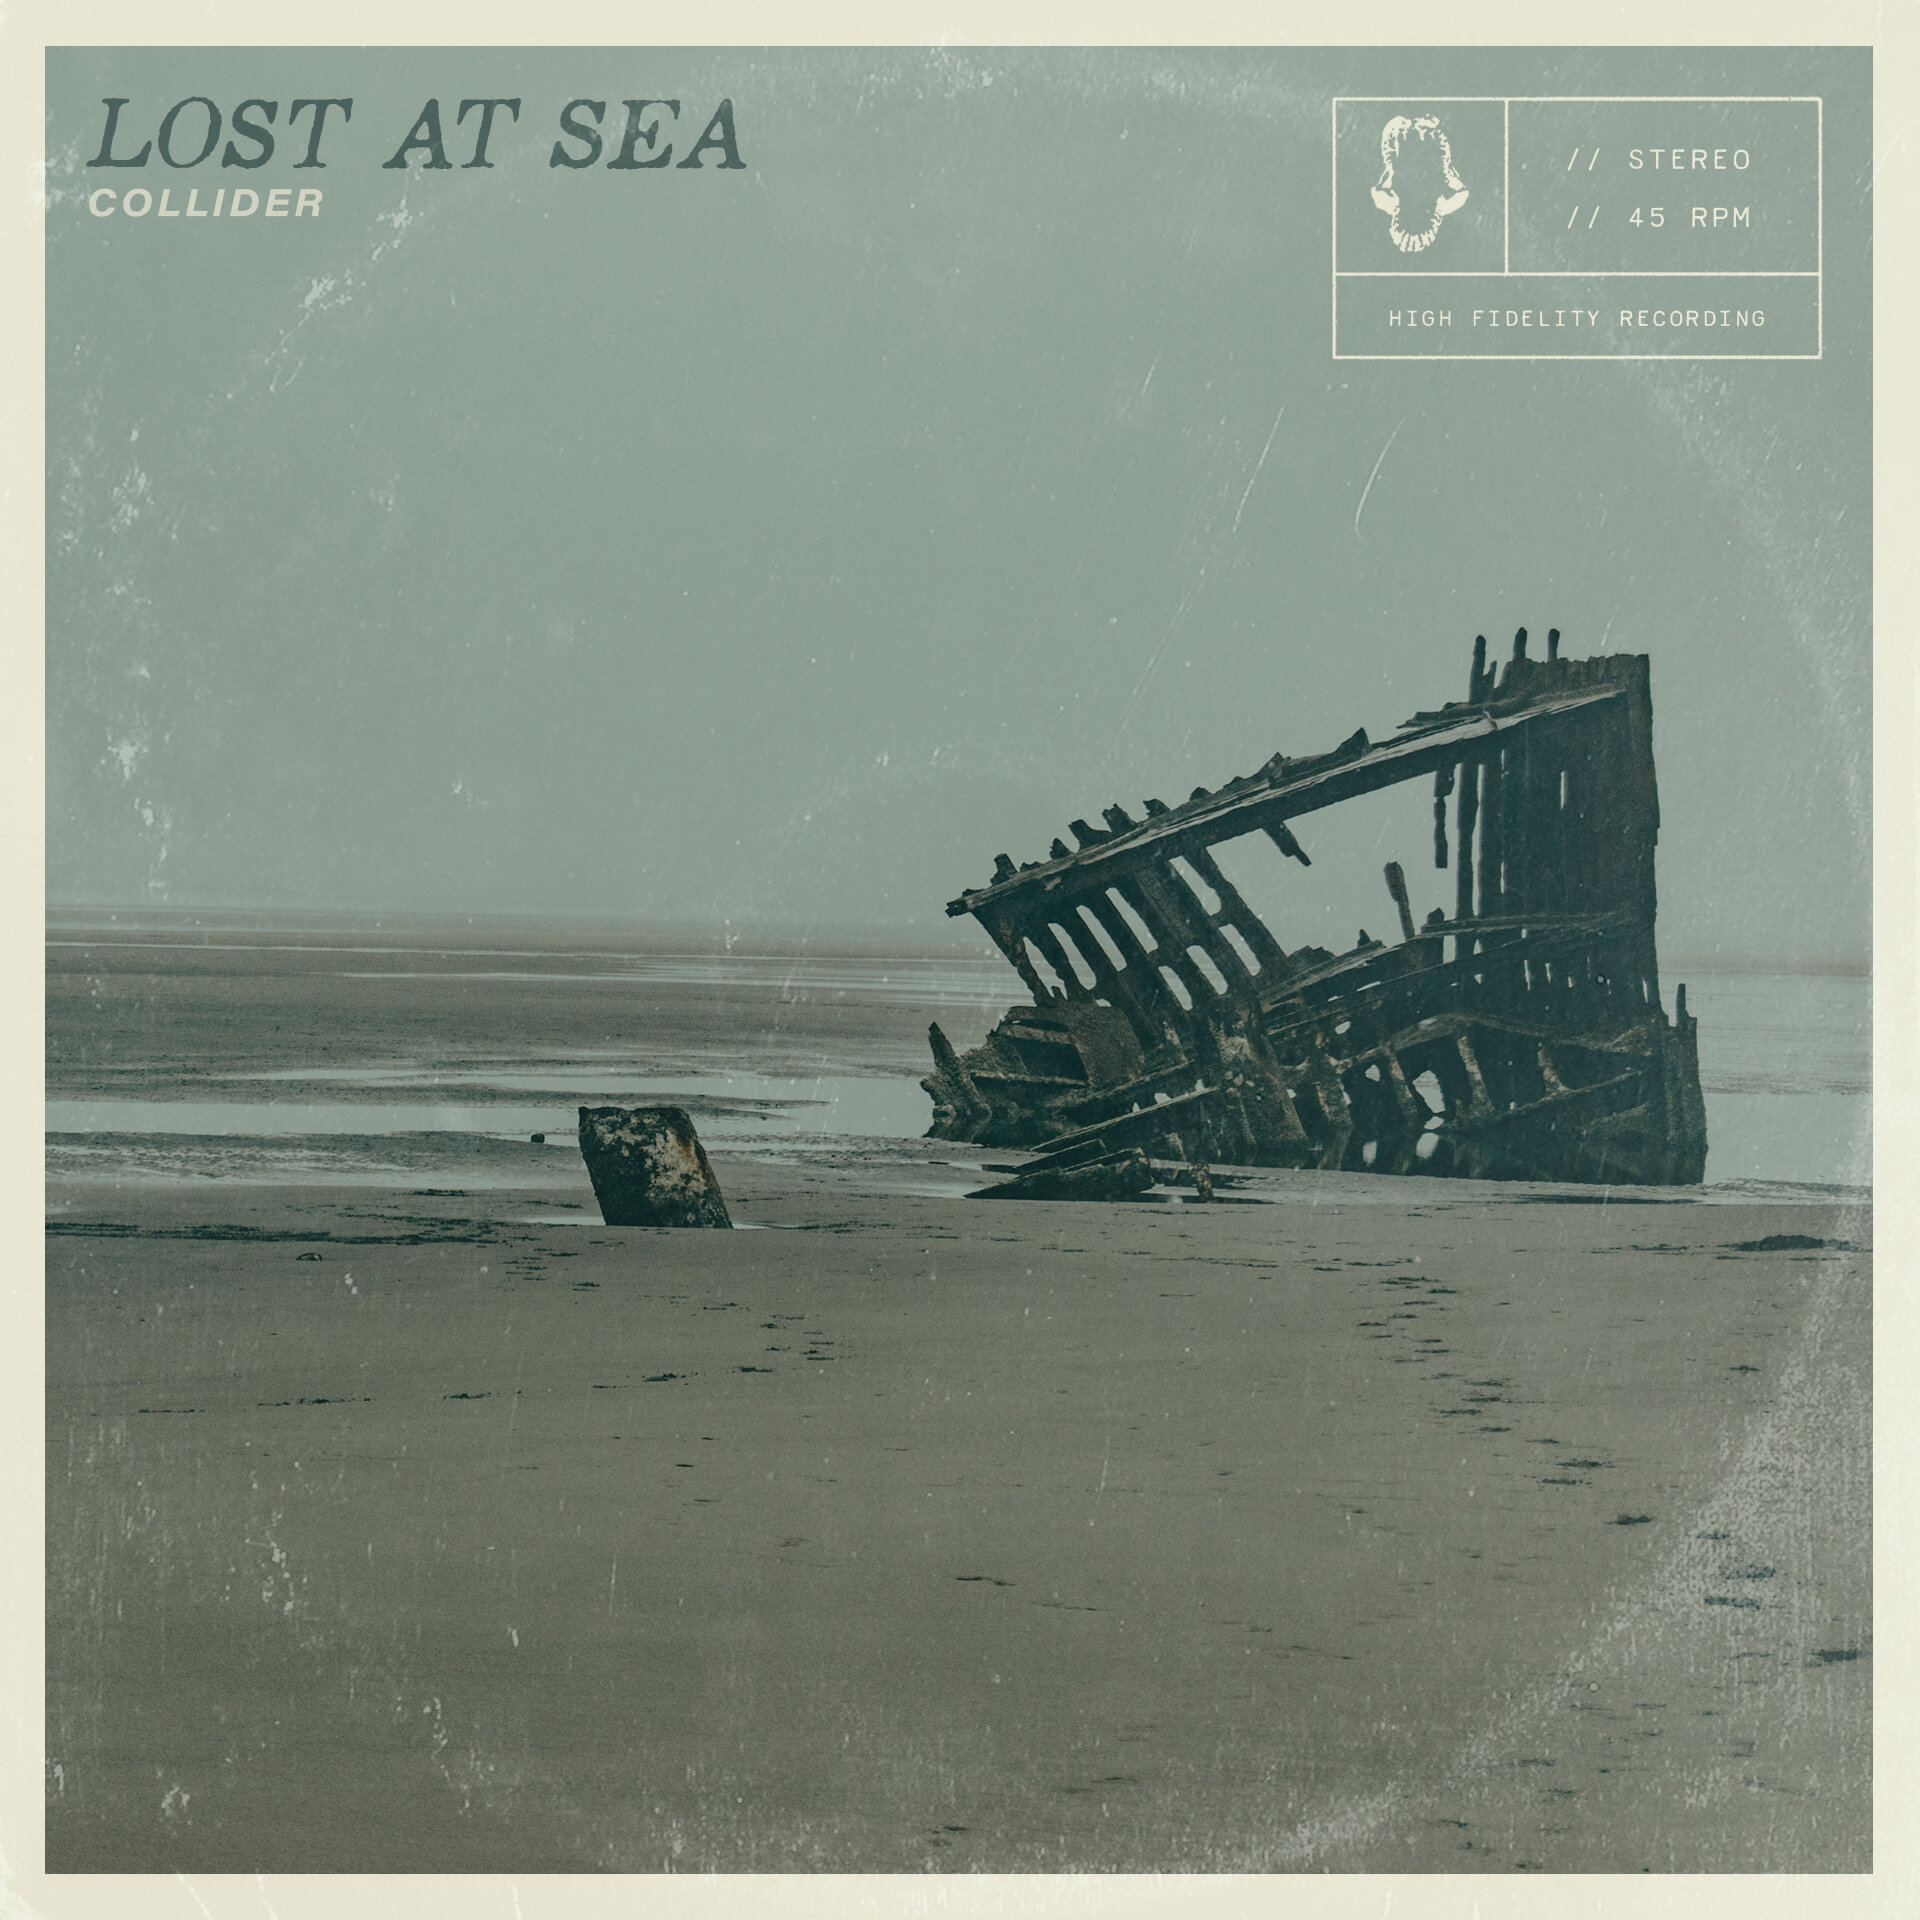 Lost At Sea - "Collider"